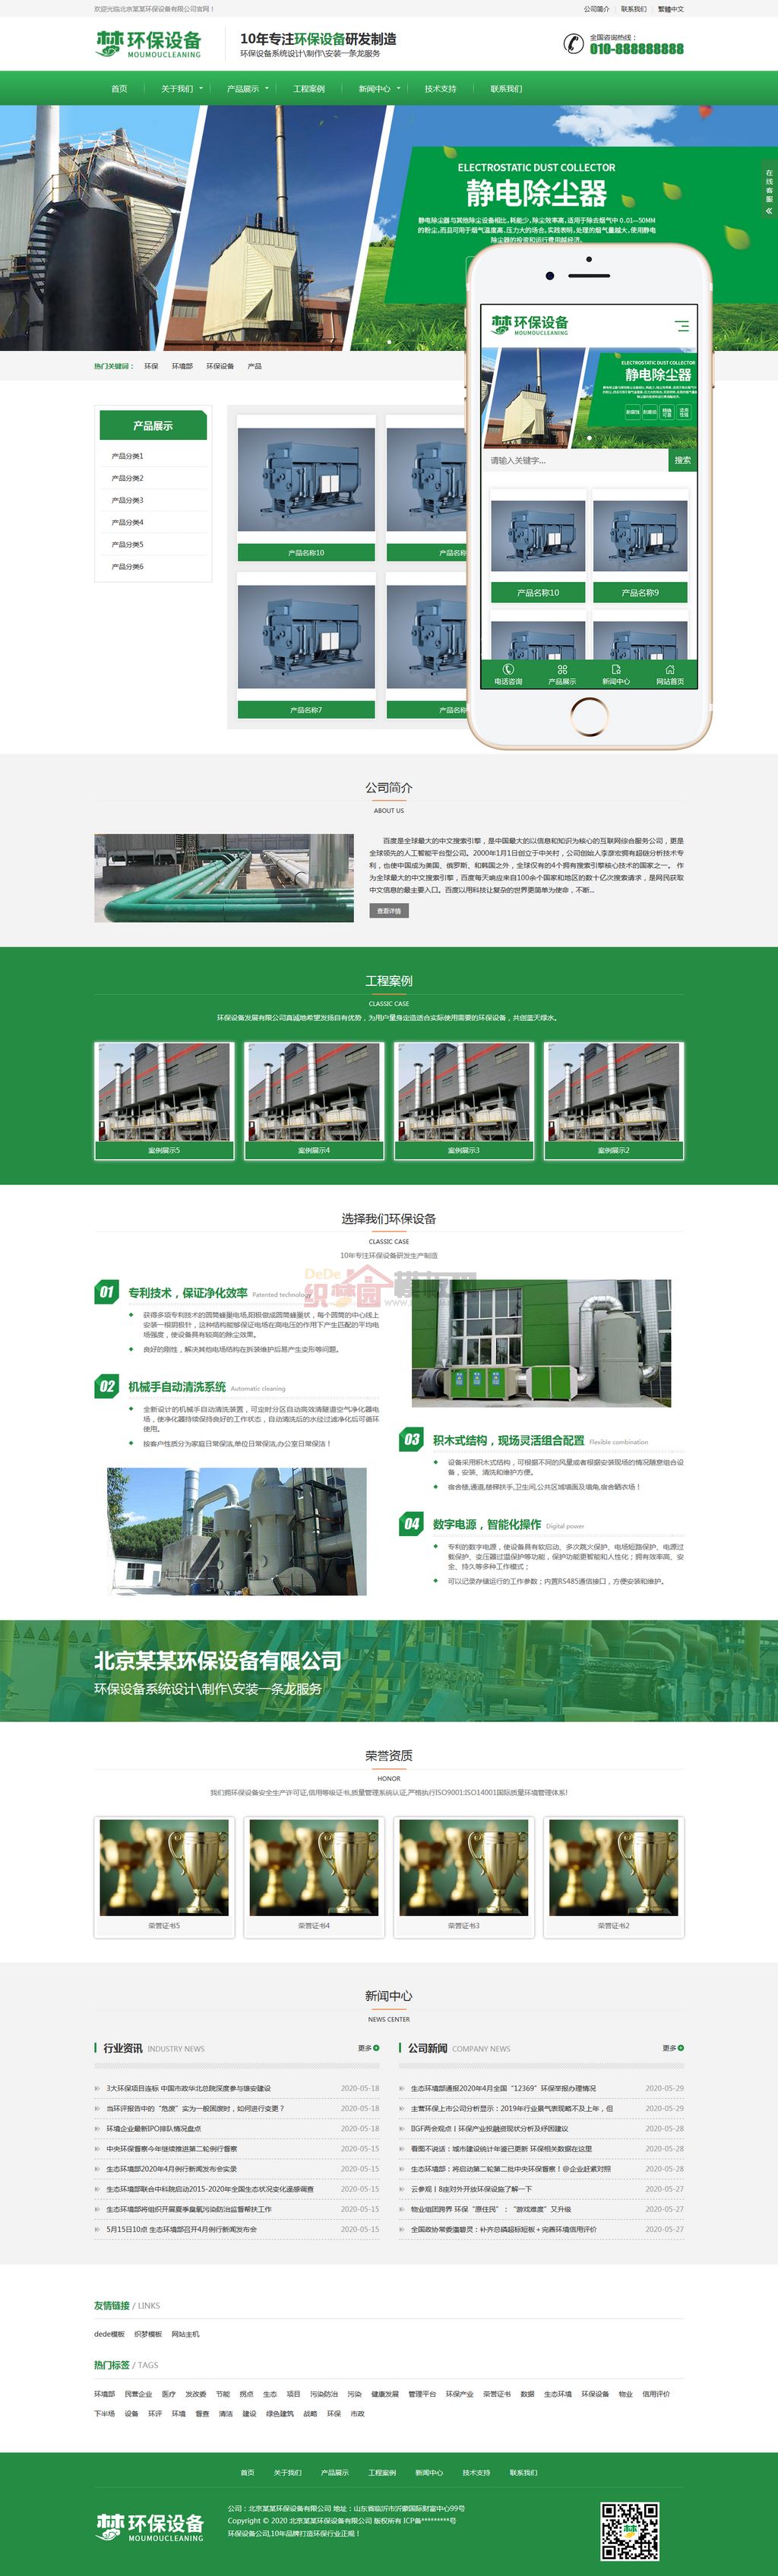 HTML5简繁双语大气绿色环保设备科技公司类网站WordPress主题模板演示图